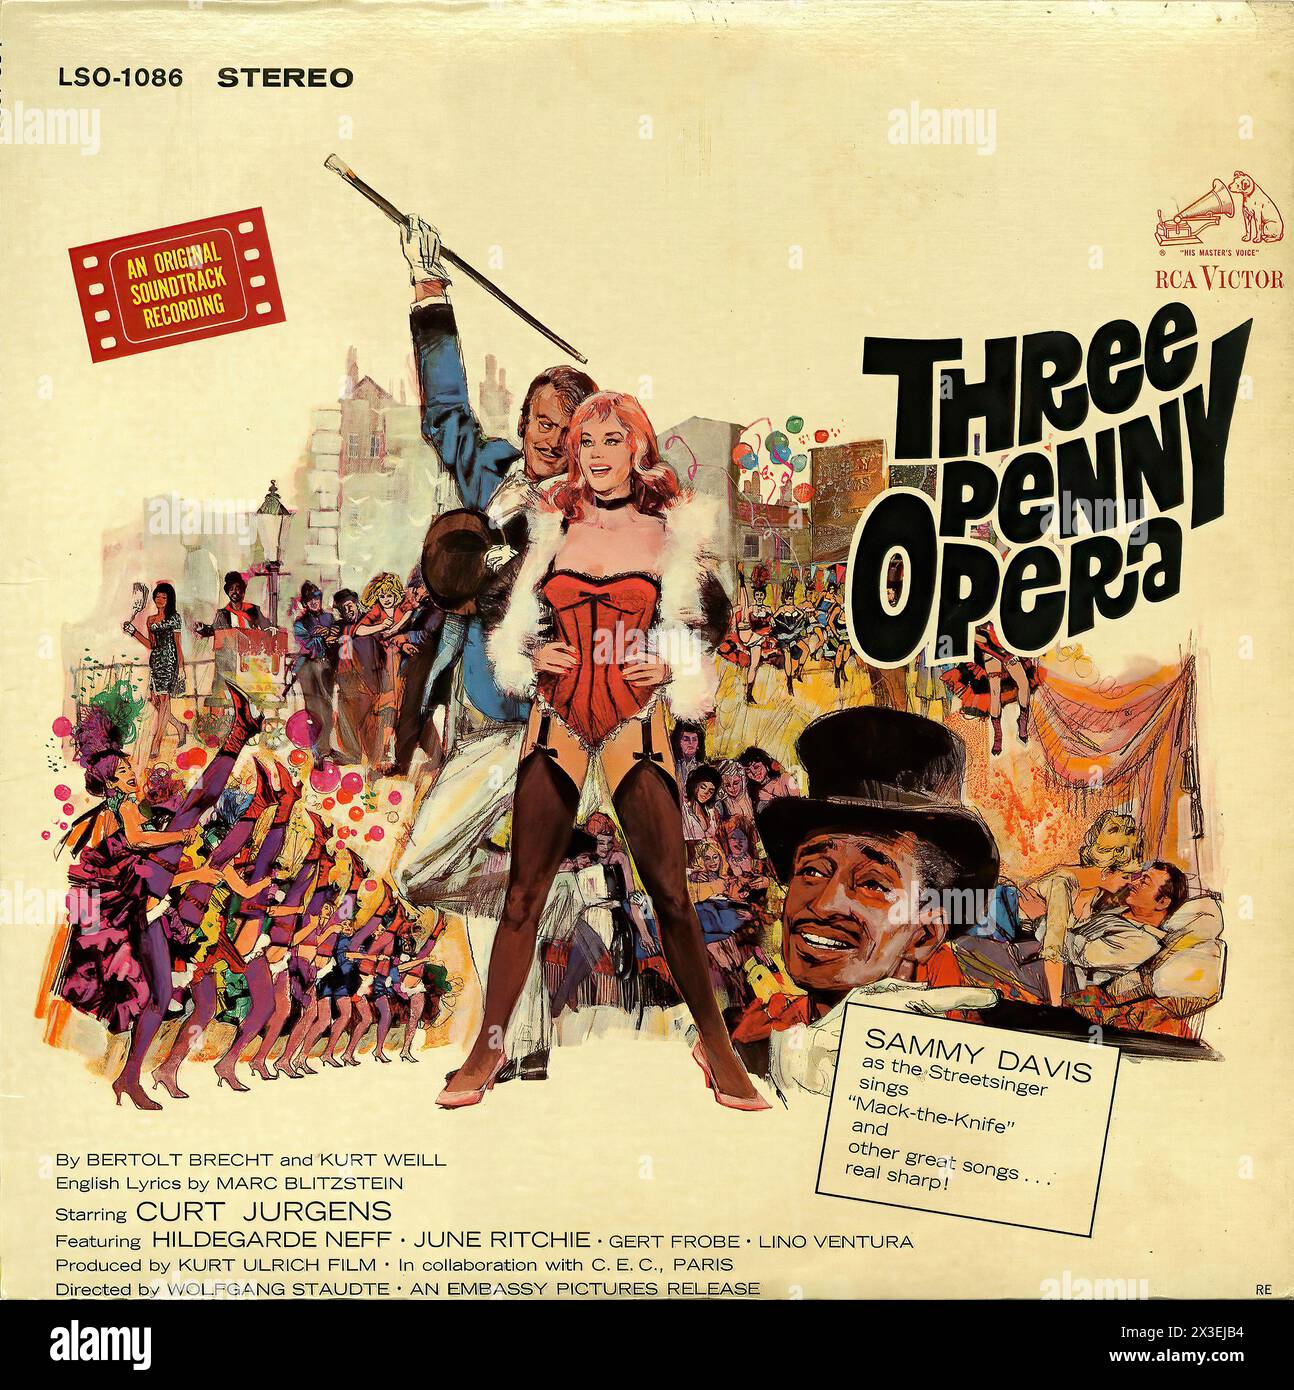 Three Penny Operar - copertina da disco d'epoca Foto Stock